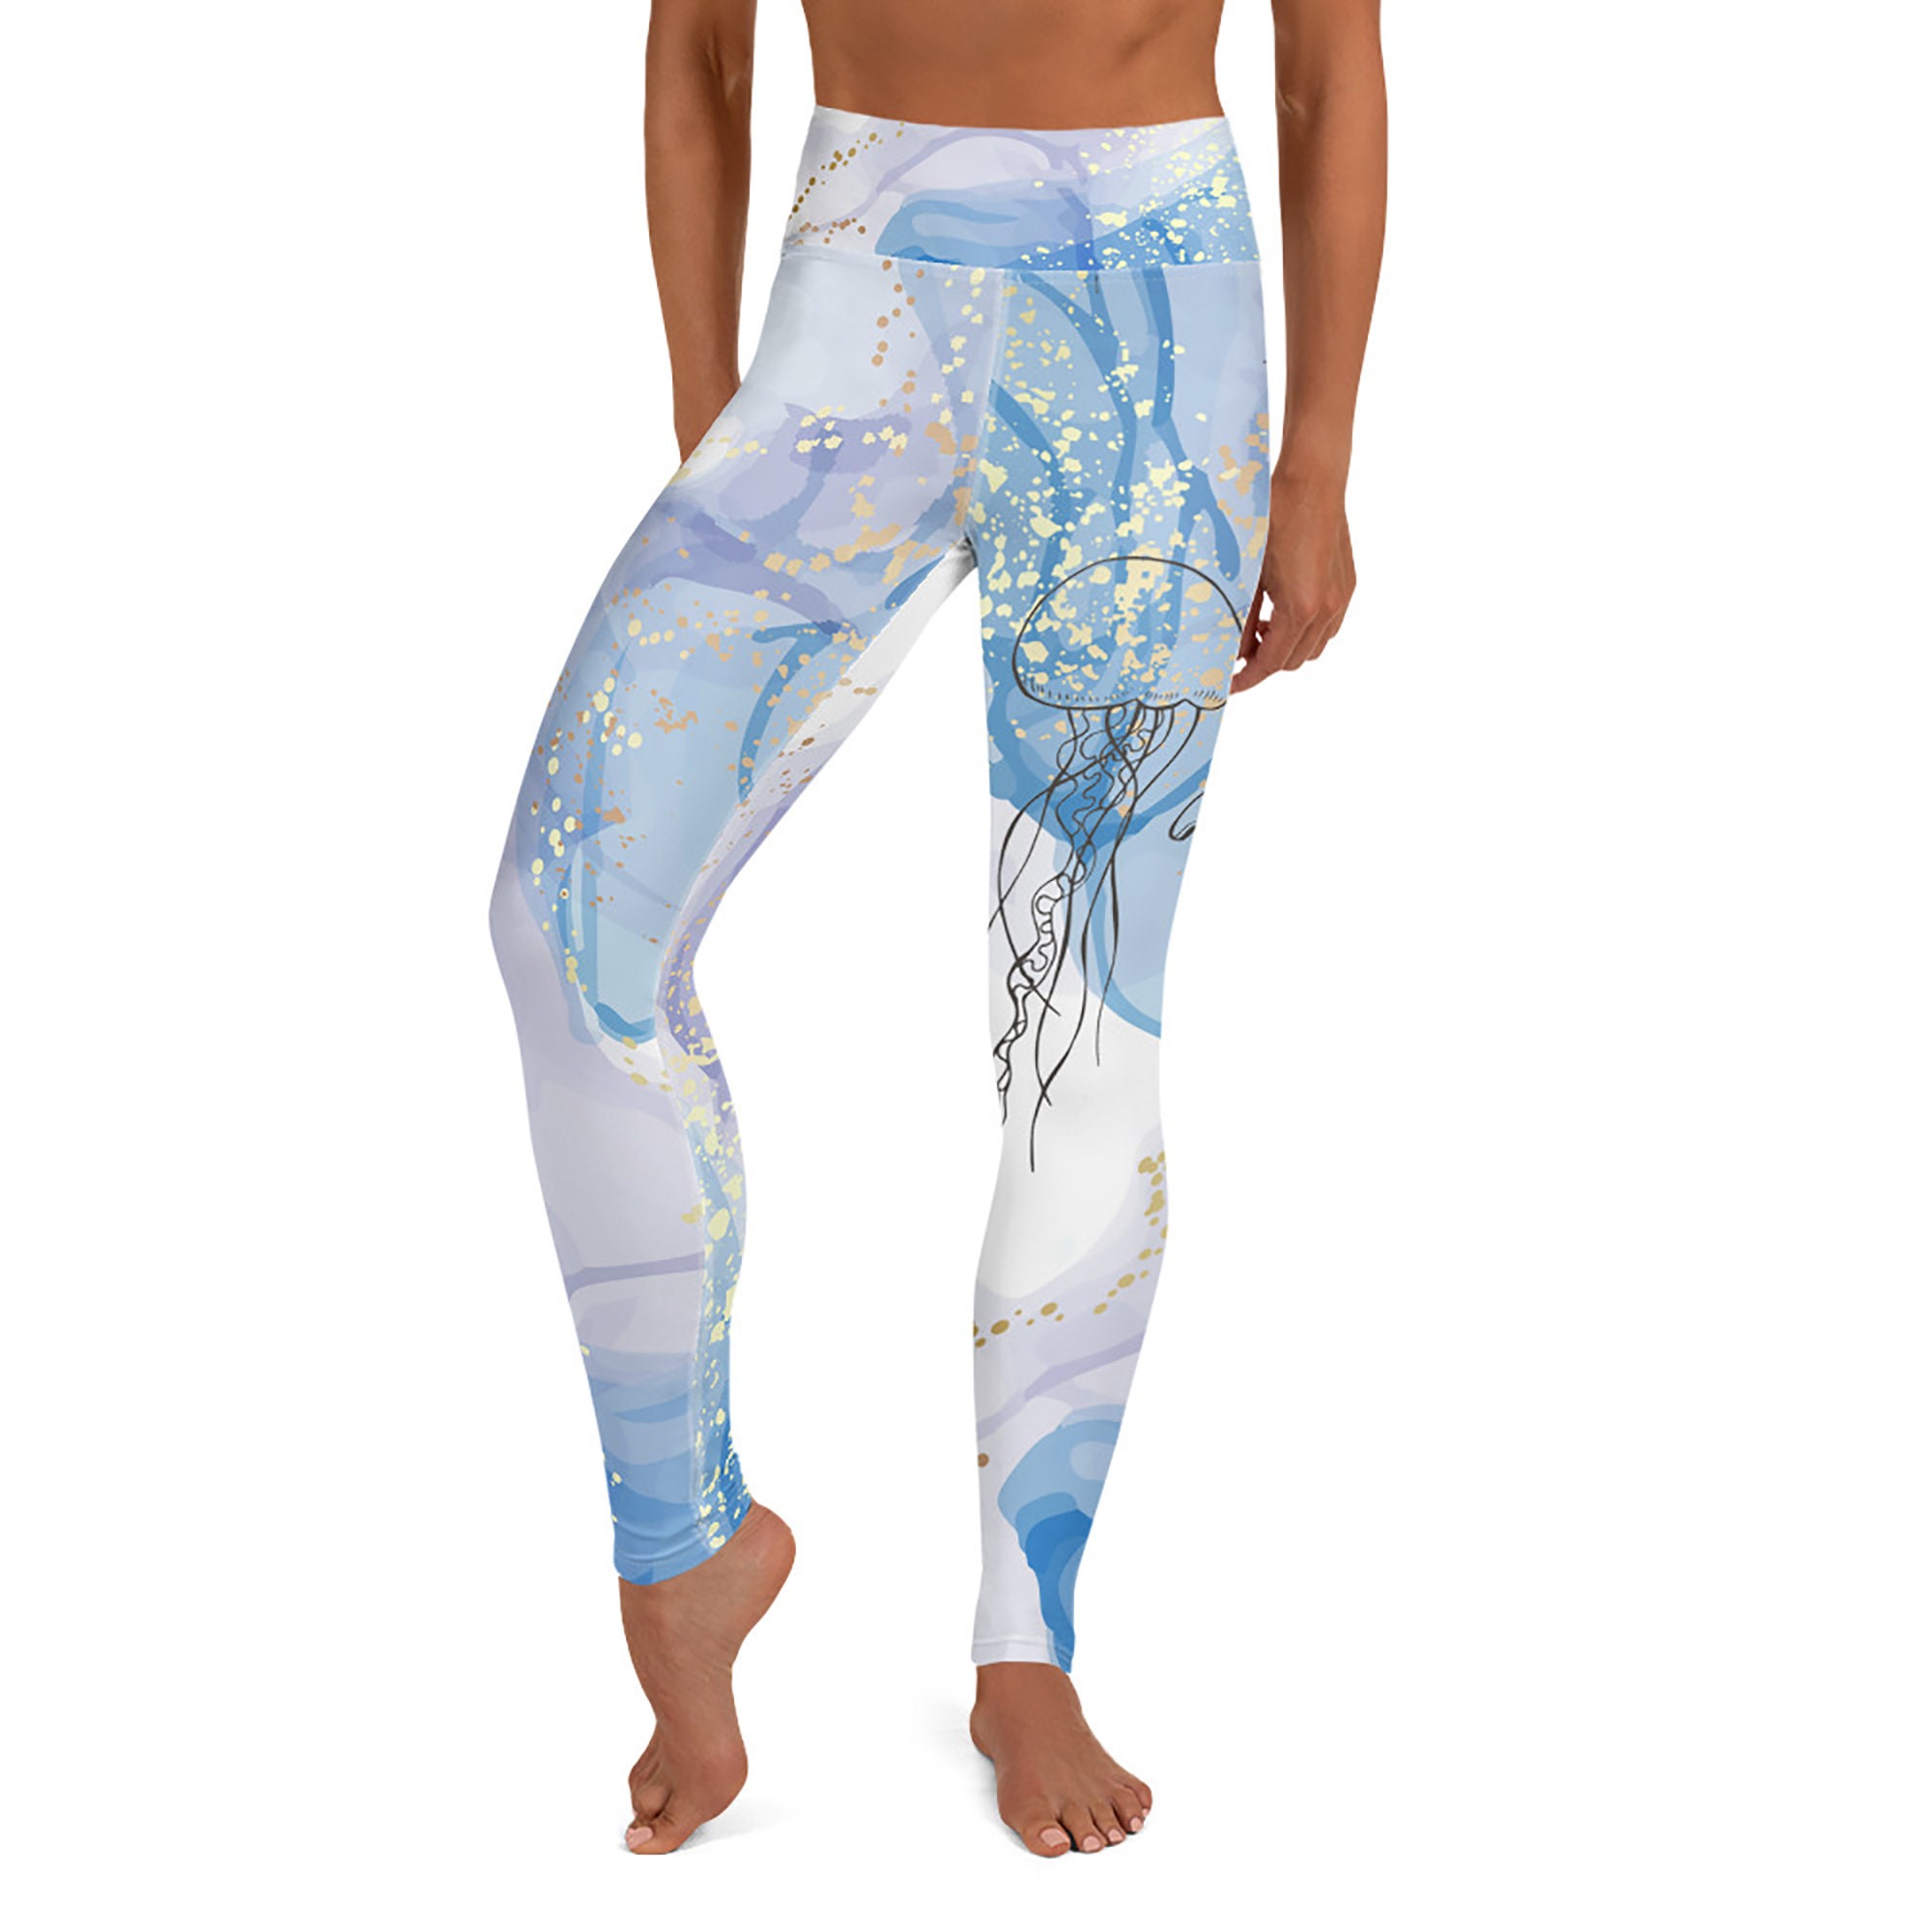 JELLYFISH LEGGINGS - Animal Yoga Pants - Jellyfish Tights - Funky Leggings - Adult Leggings - Ultra Soft Leggings - High Waist Tights